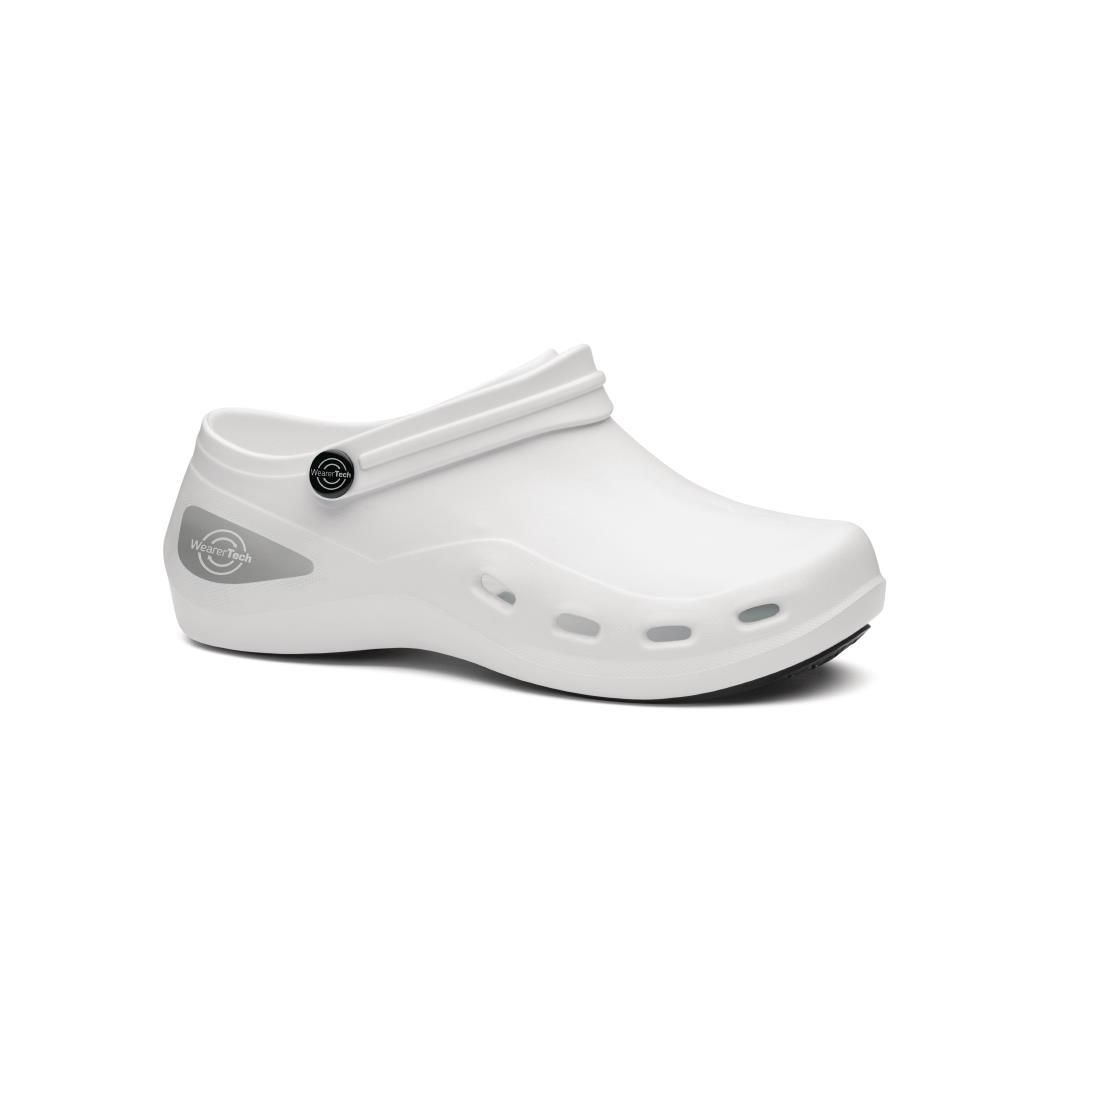 WearerTech Unisex Invigorate White Safety Shoe Size 6 - BB199-39.5  - 1